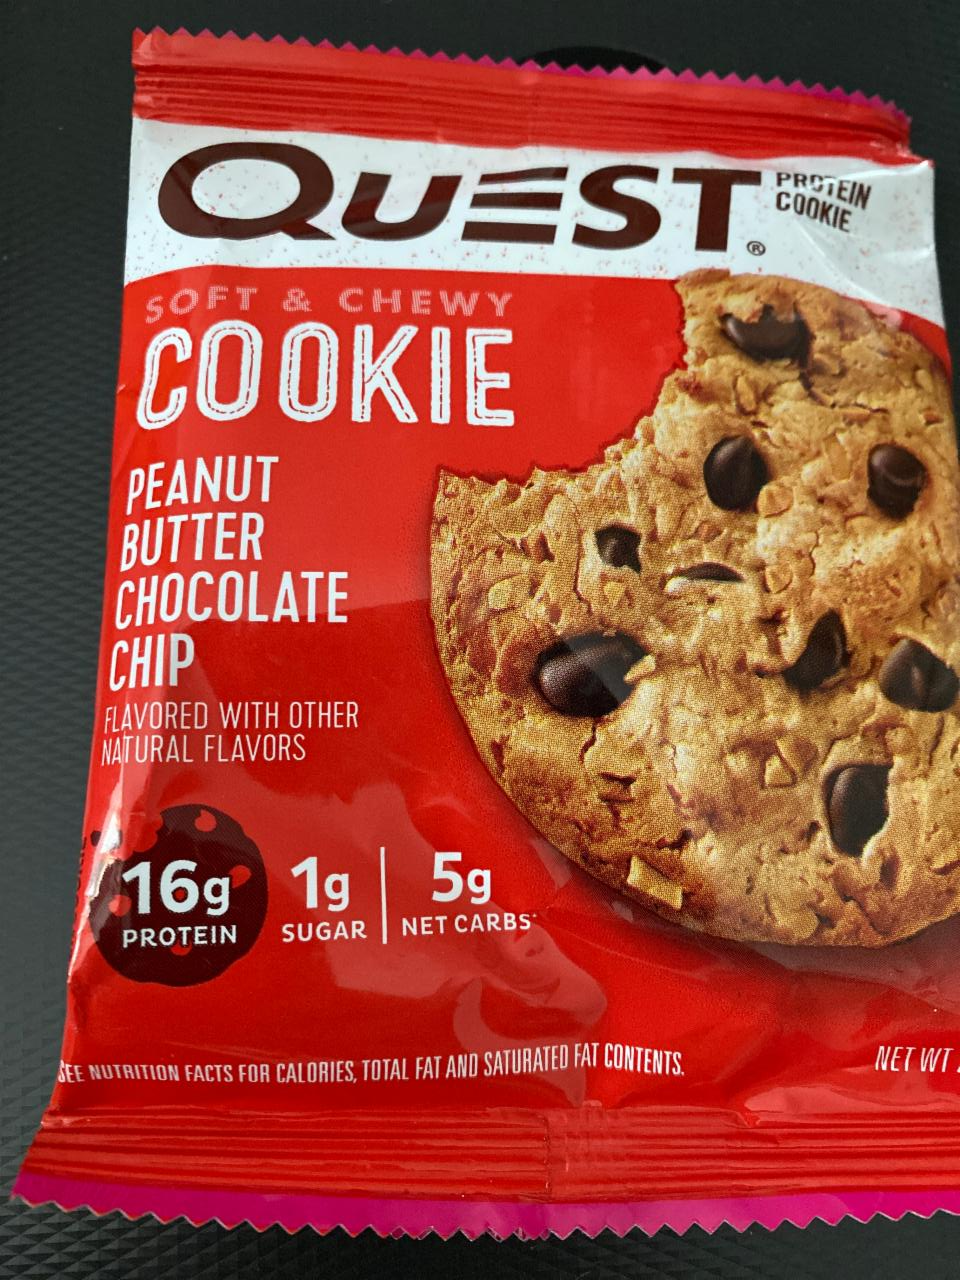 Fotografie - Protein Cookie peanut butter chocolate chip Quest